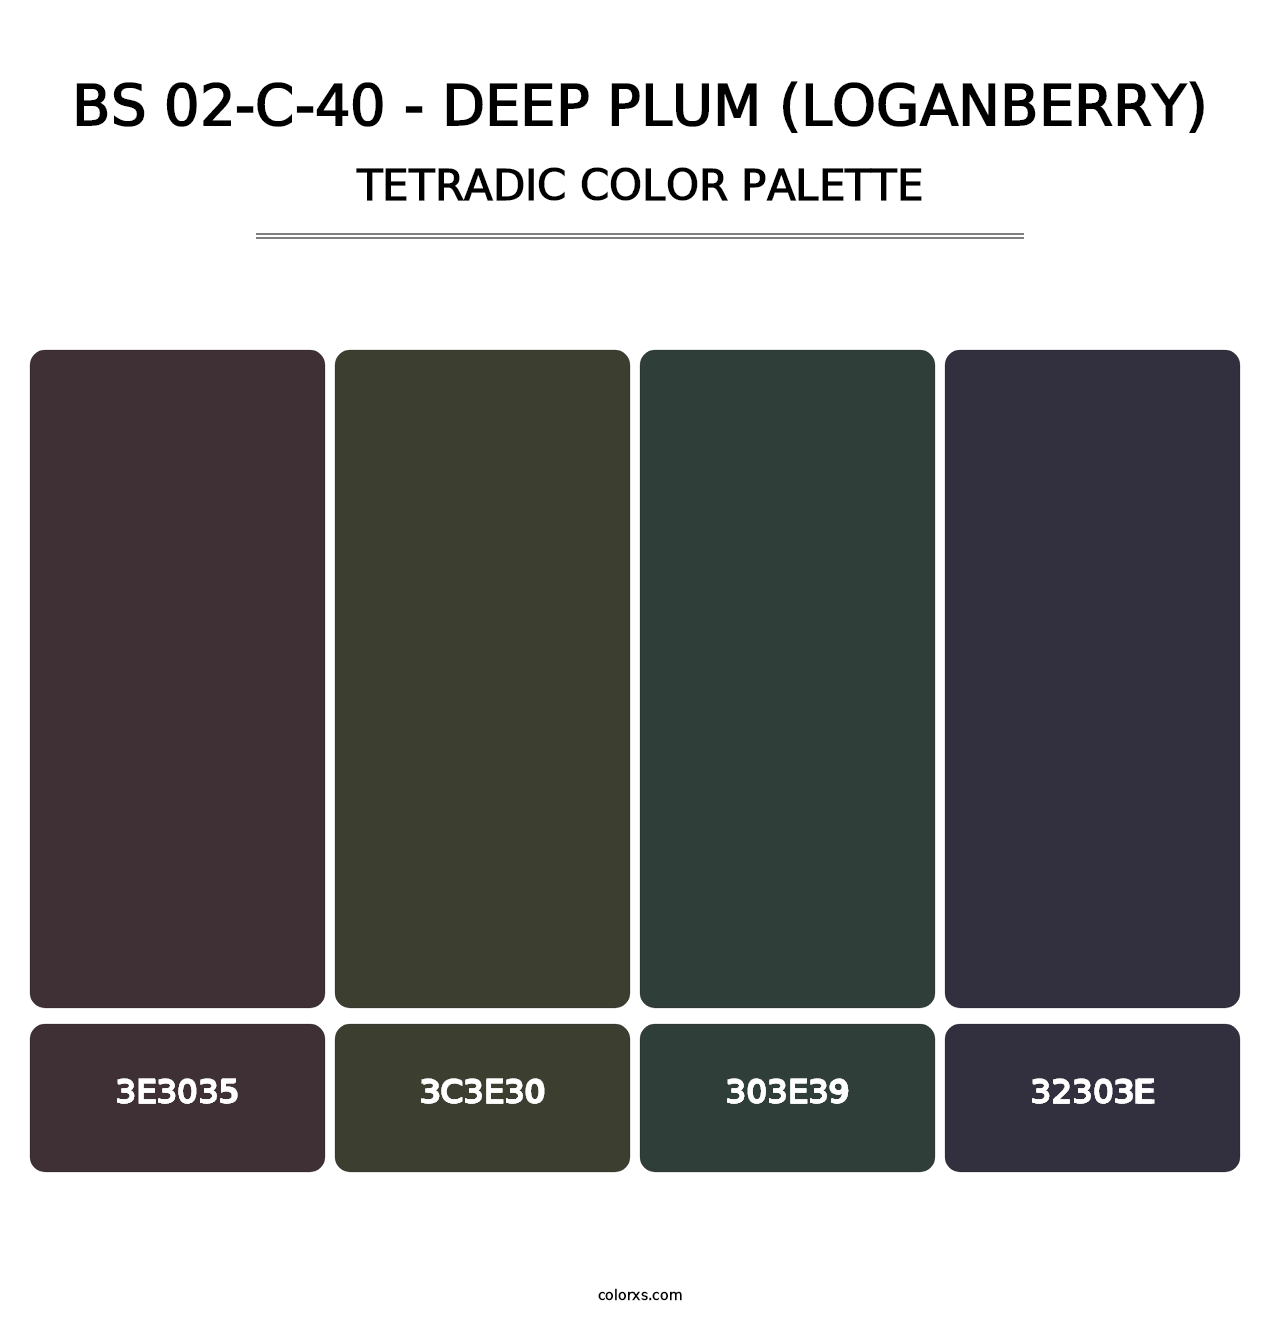 BS 02-C-40 - Deep Plum (Loganberry) - Tetradic Color Palette